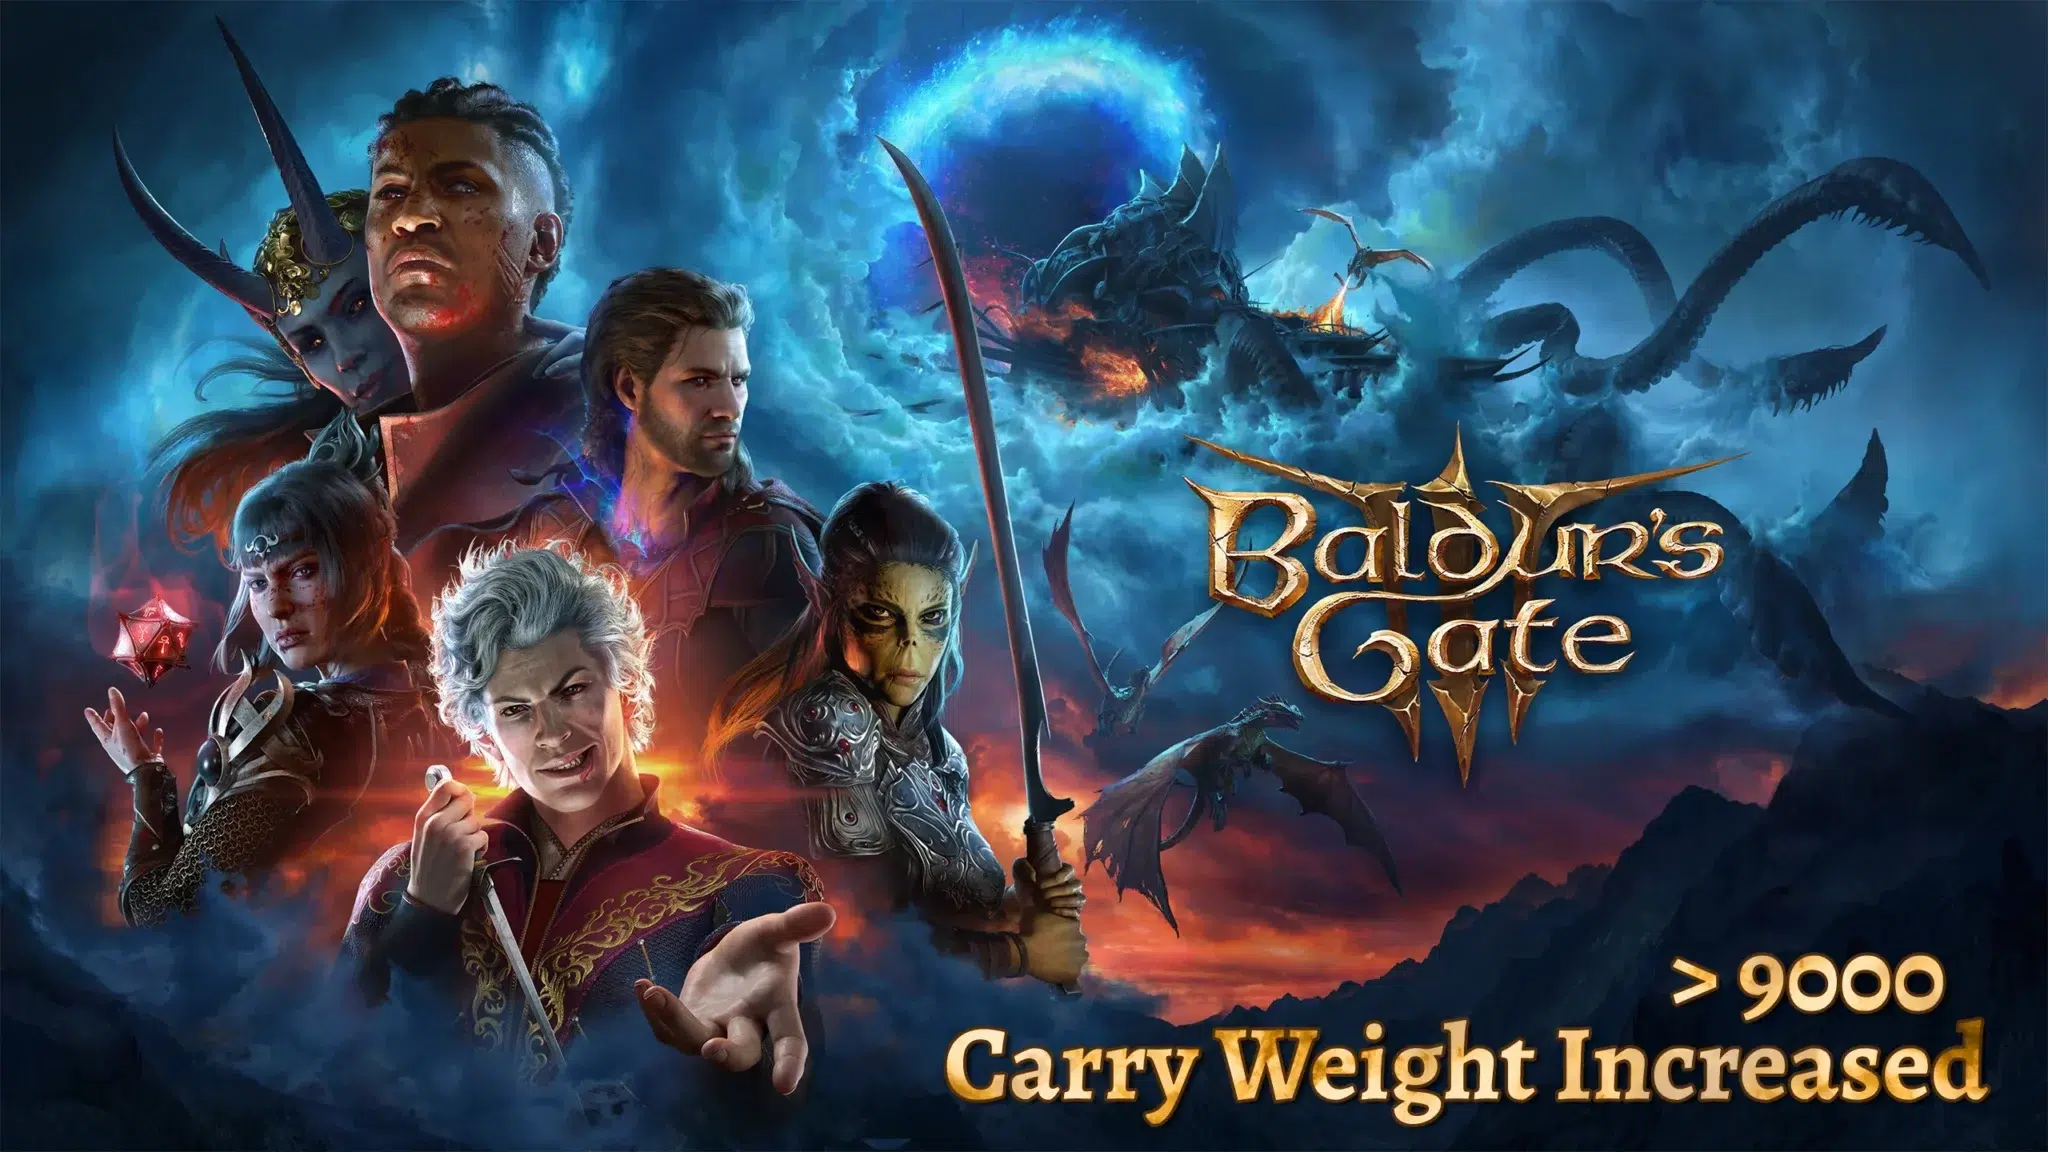 Baldur's Gate 3 Carry weight Increased